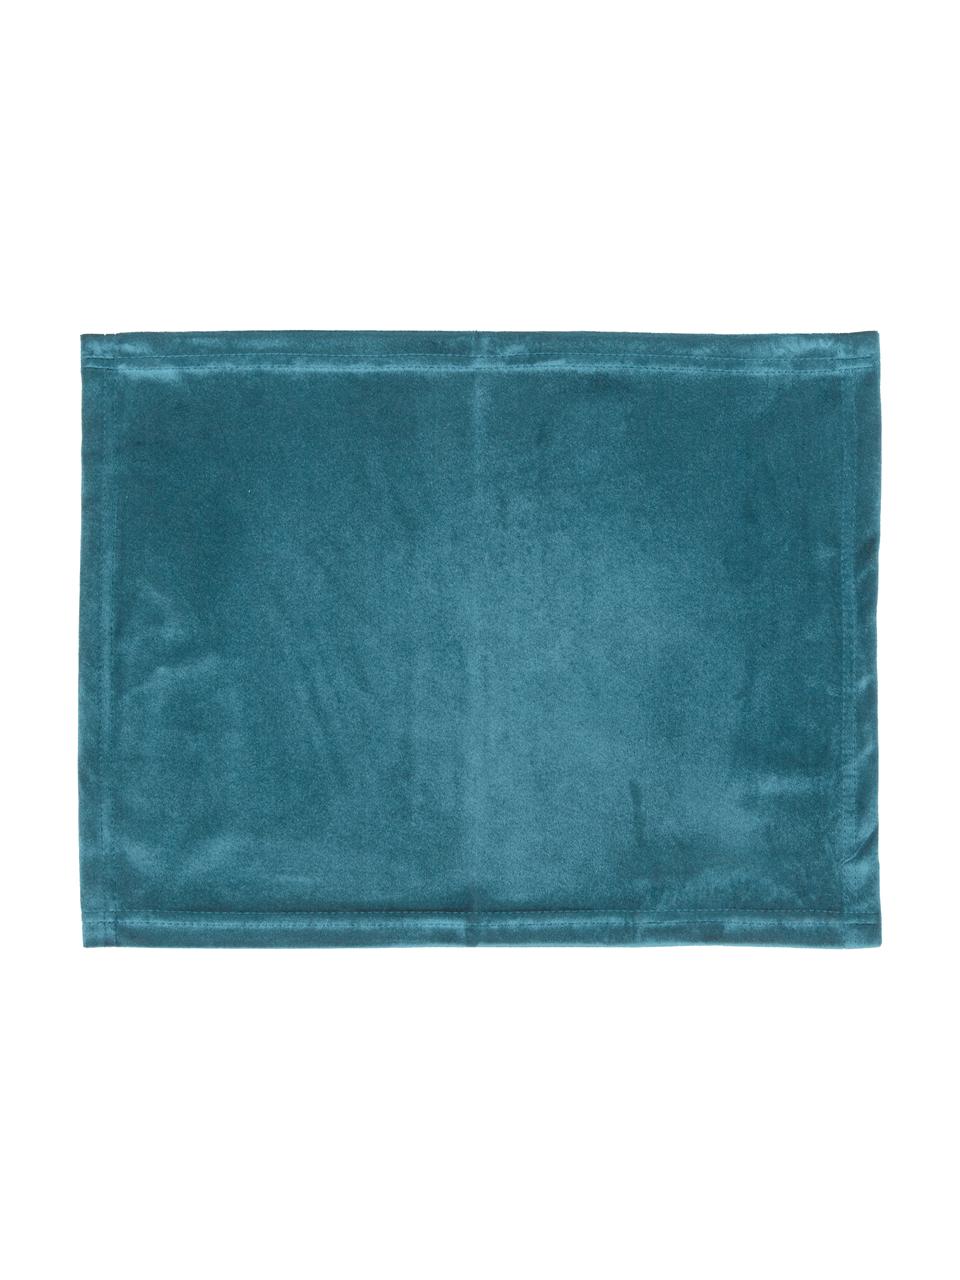 Fluwelen placemats Simone, 2 stuks, 100% polyester fluweel, Jadegroen, 35 x 45 cm